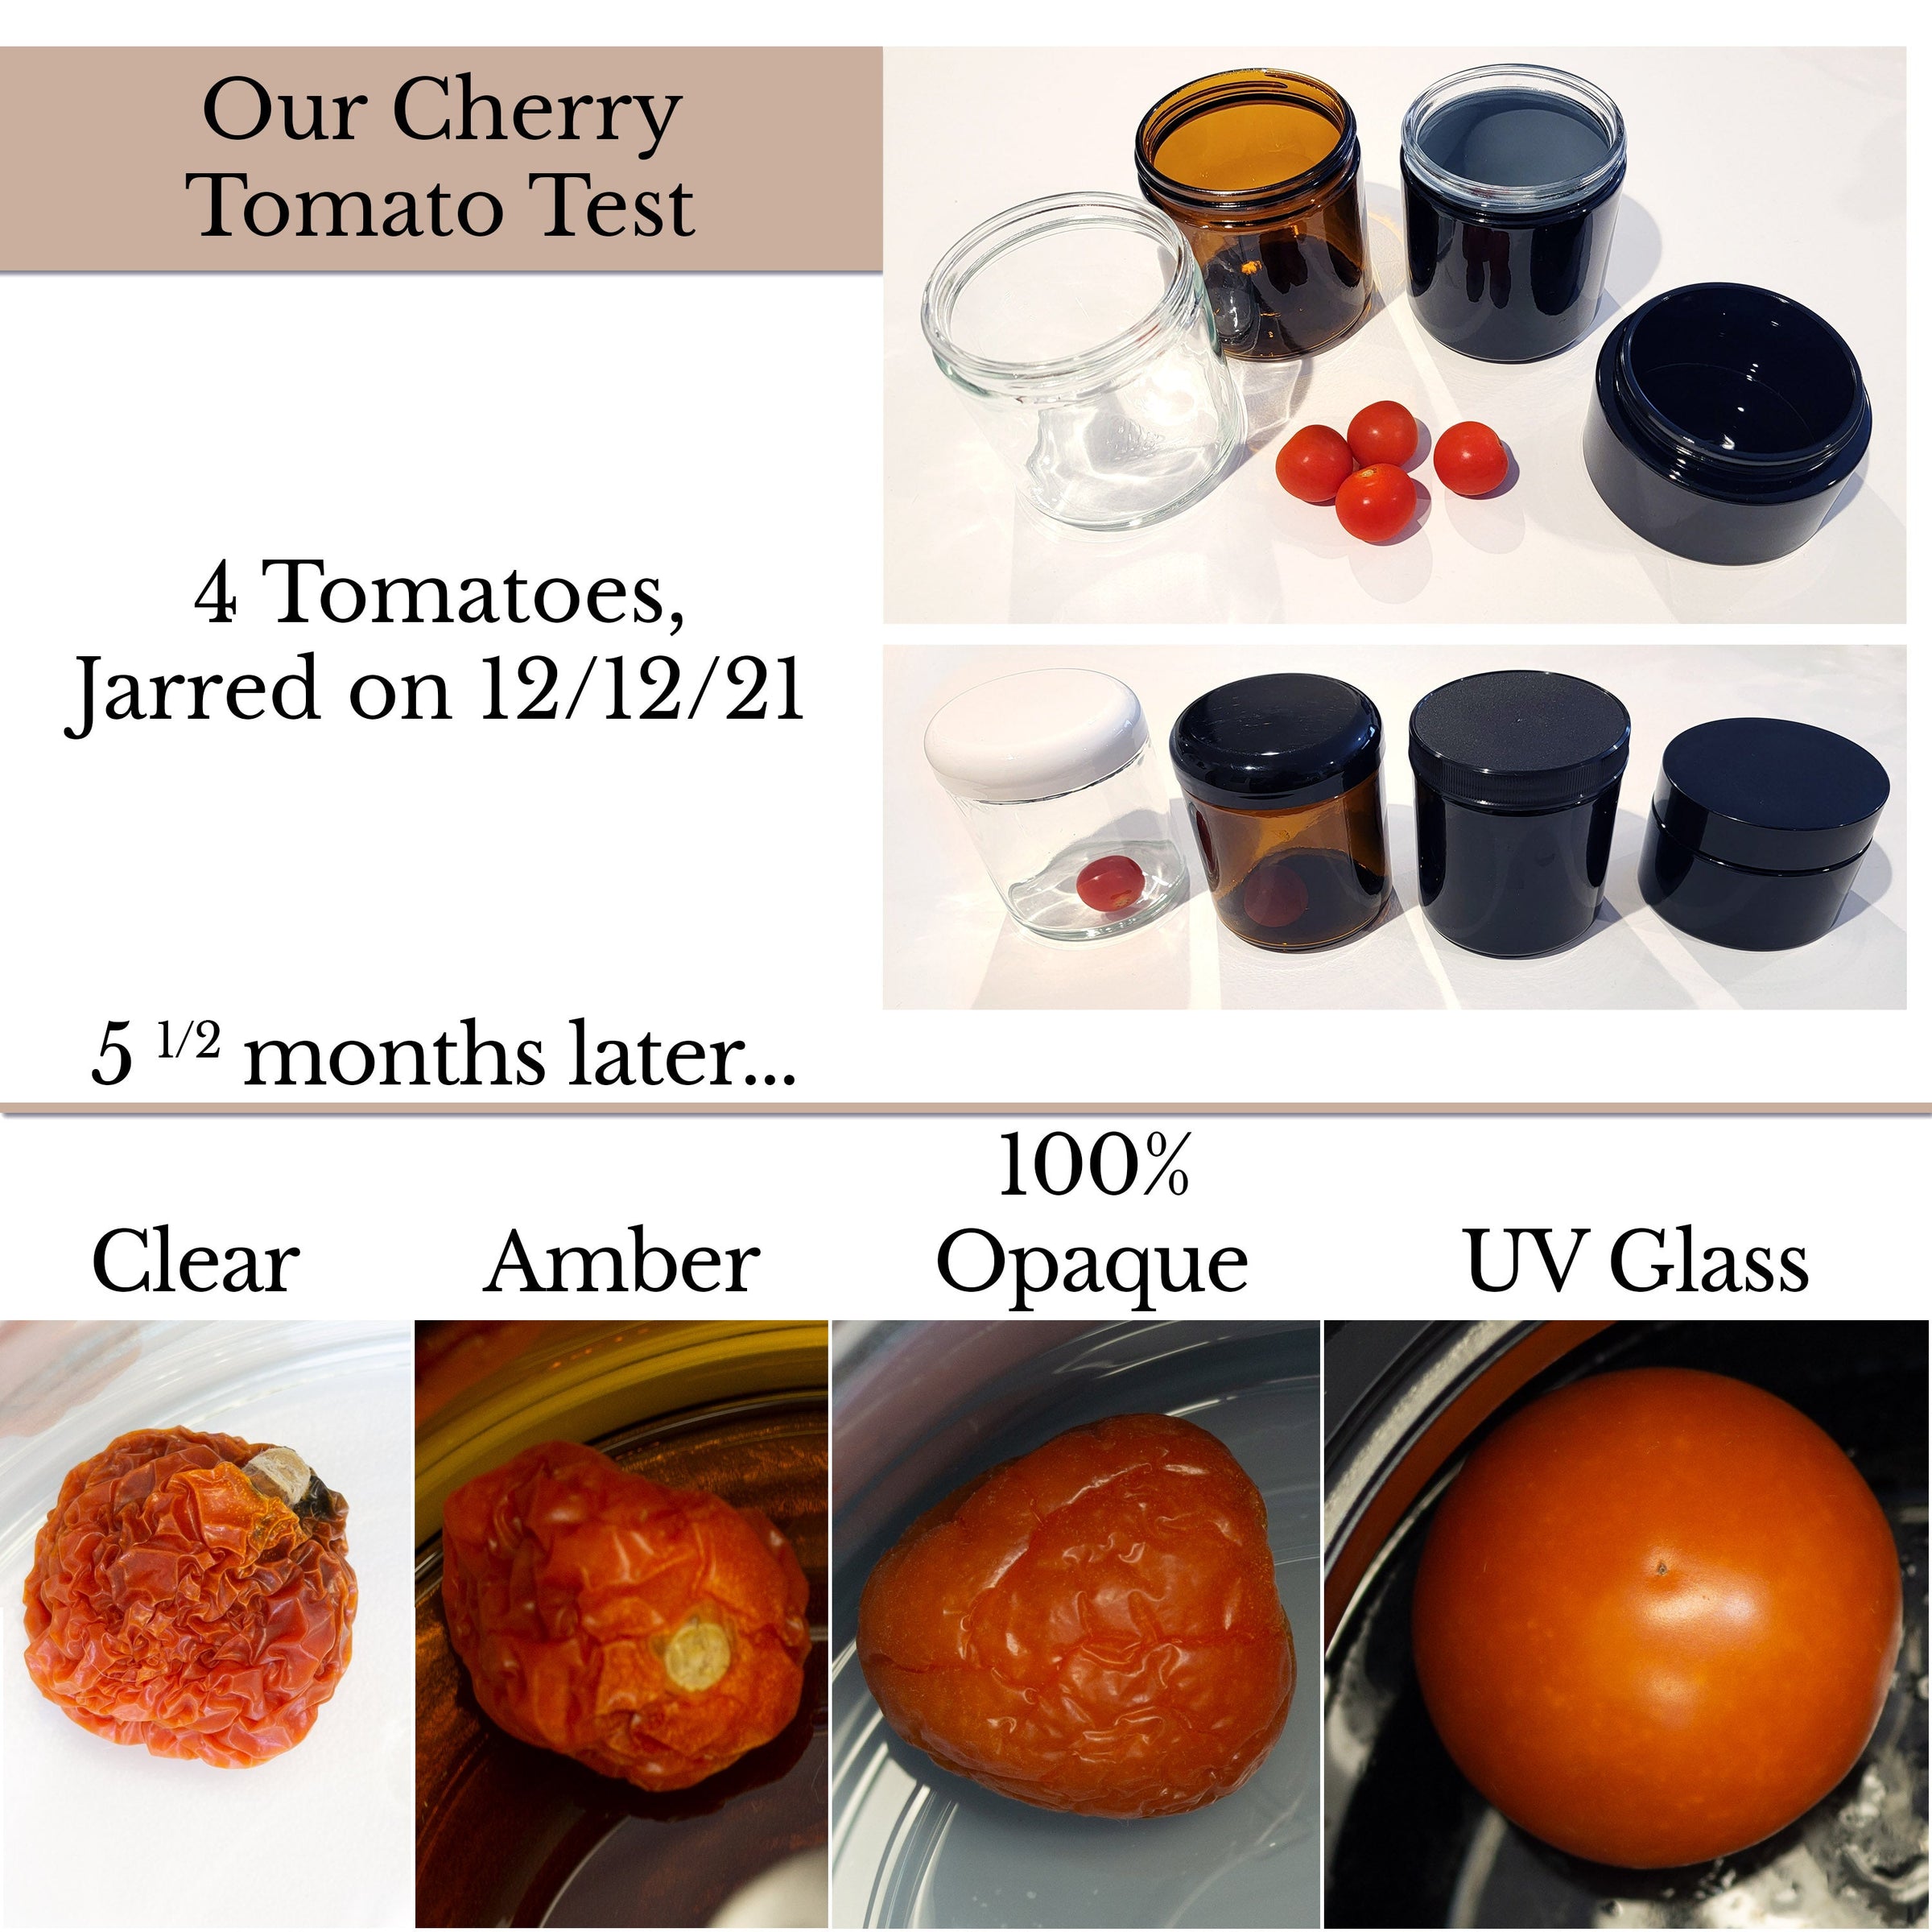 Miron Ultraviolet Glass Apothecary Jar 500ml (16 oz)